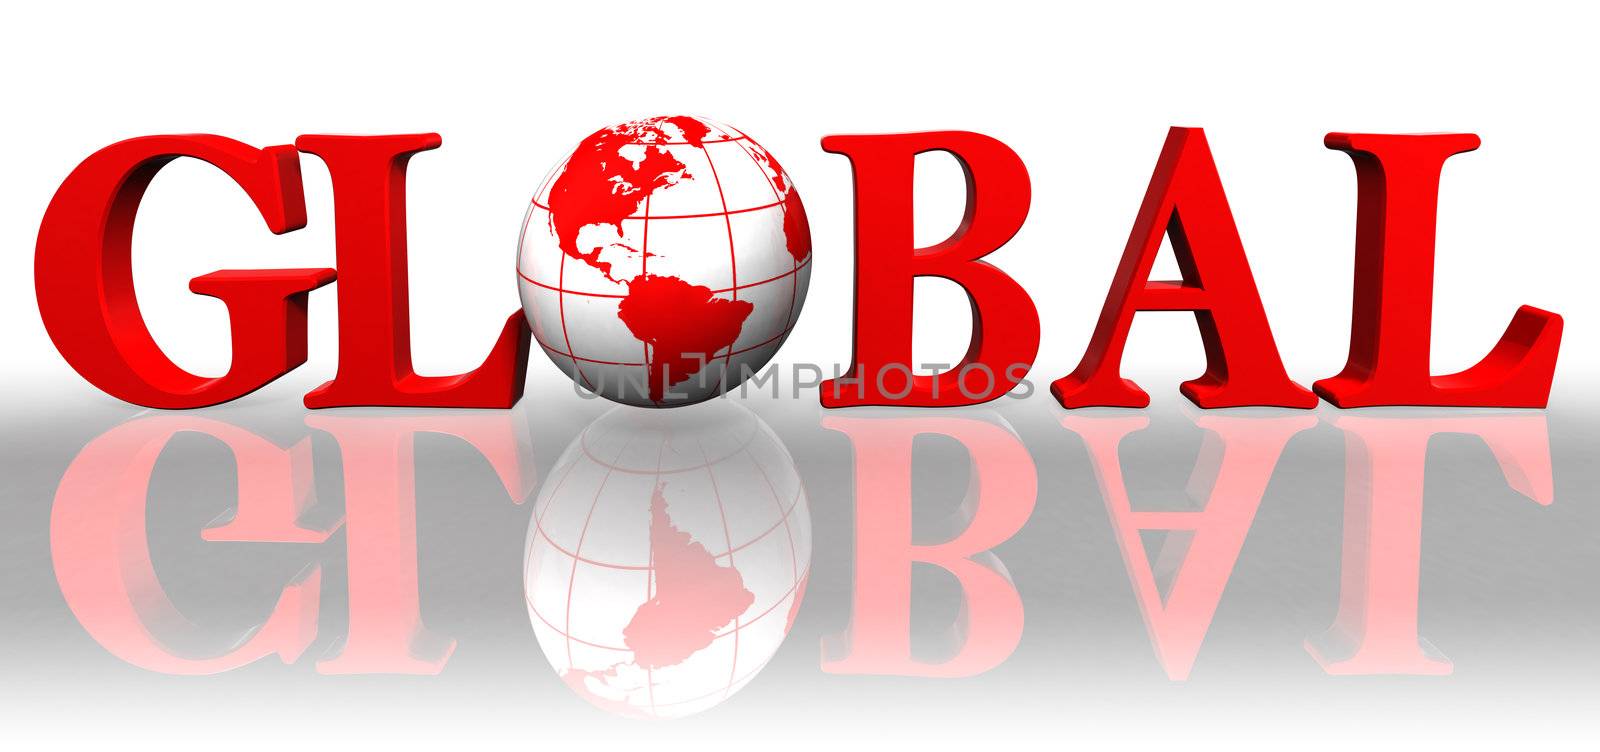 global red word and earth globe by donskarpo